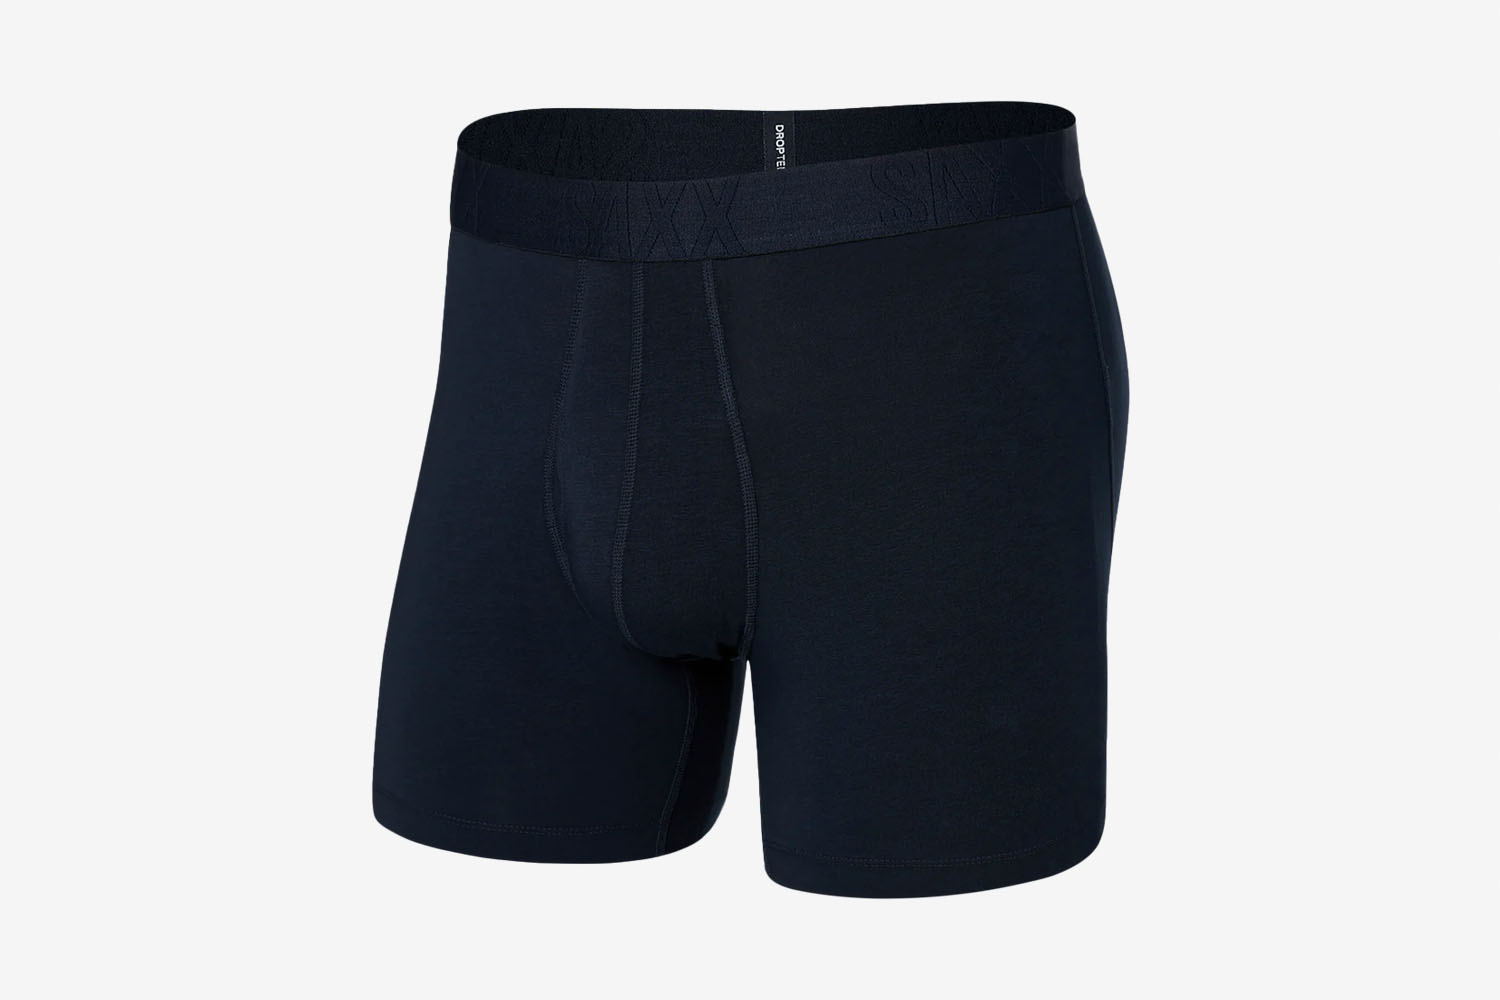 Review: SAXX's Newest Underwear Is Built for Better Sleep - InsideHook